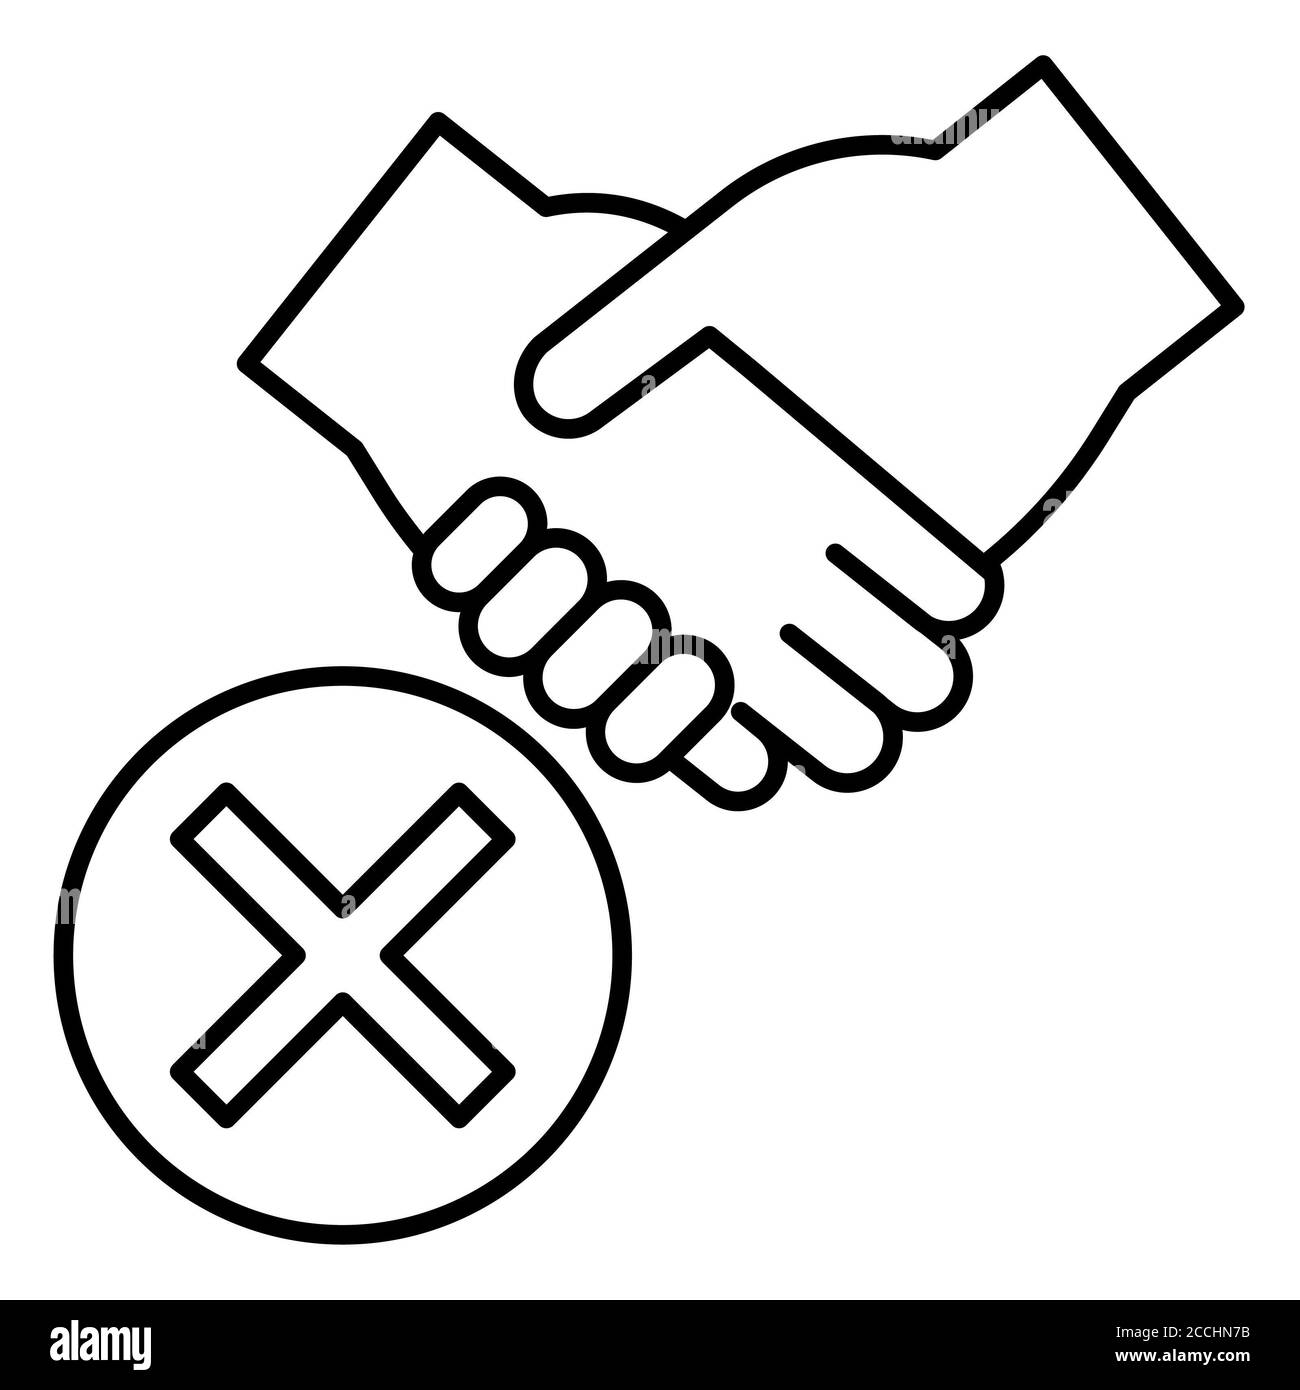 No Handshake Corona Line Icon Stock Photo